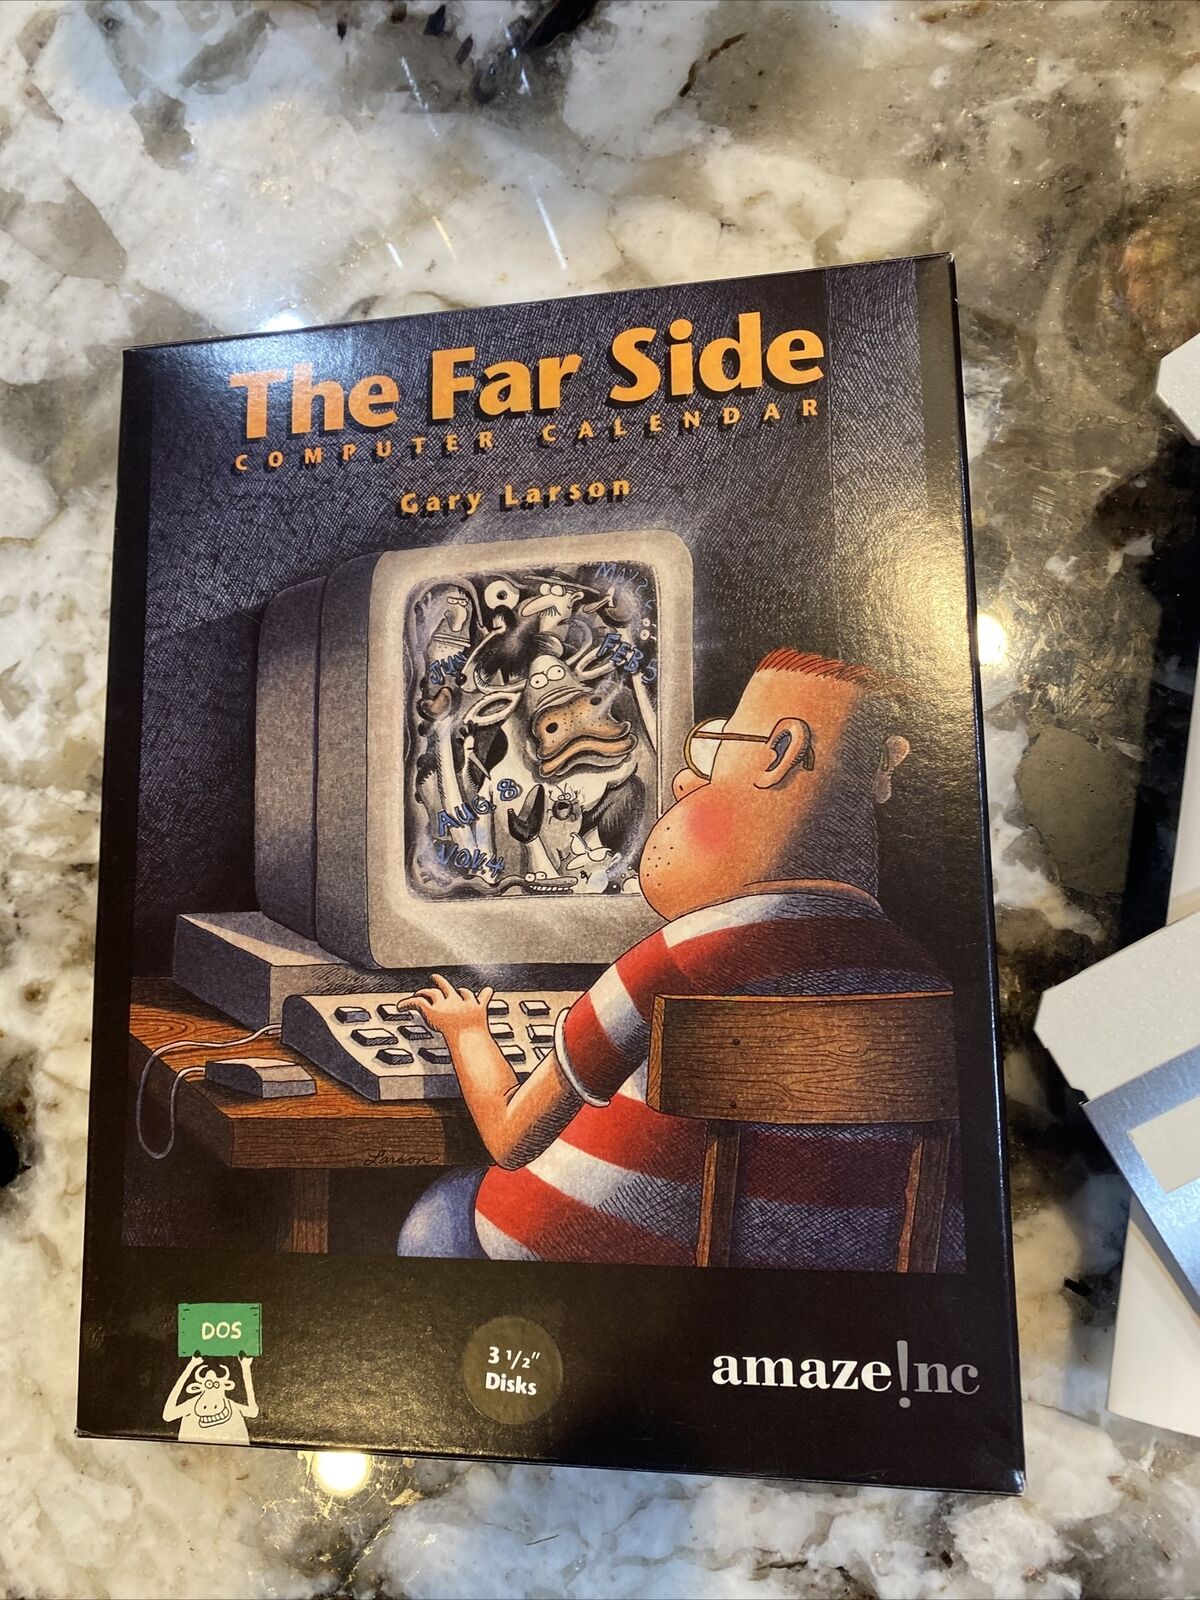 The Far Side Computer Calendar Windows PC software 5 1/4 Floppy Disk Gary Larson